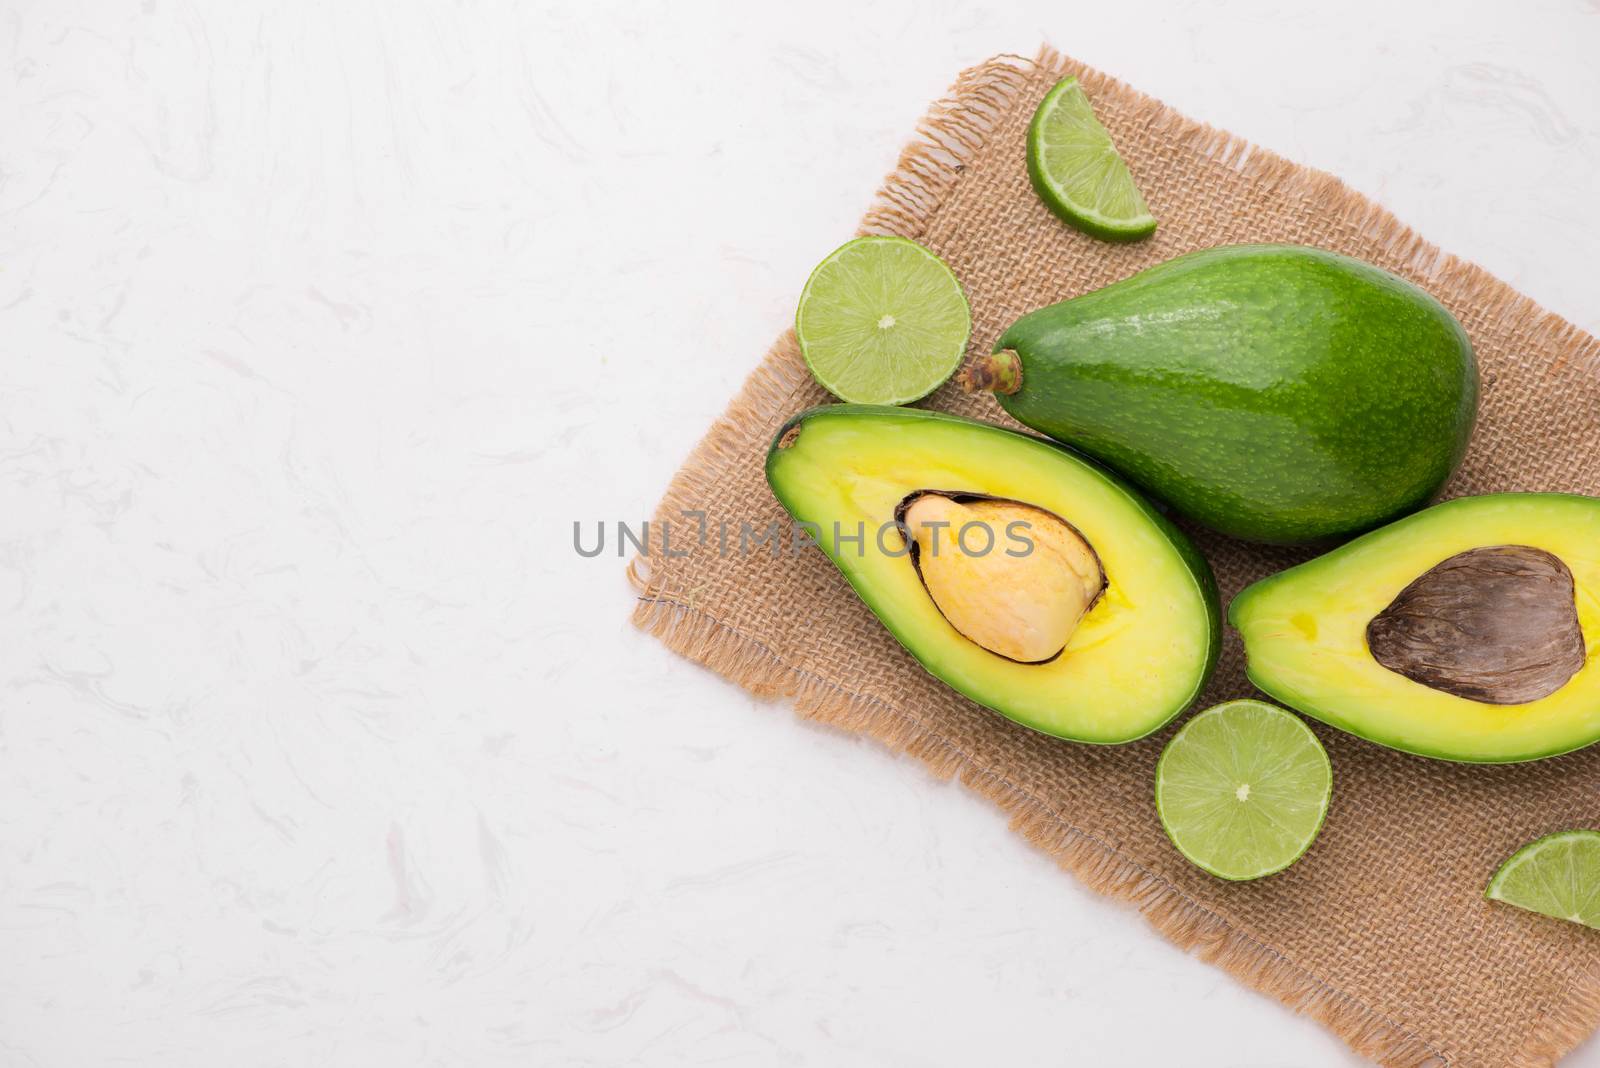 Healthy food concept. Fresh organic avocado on table